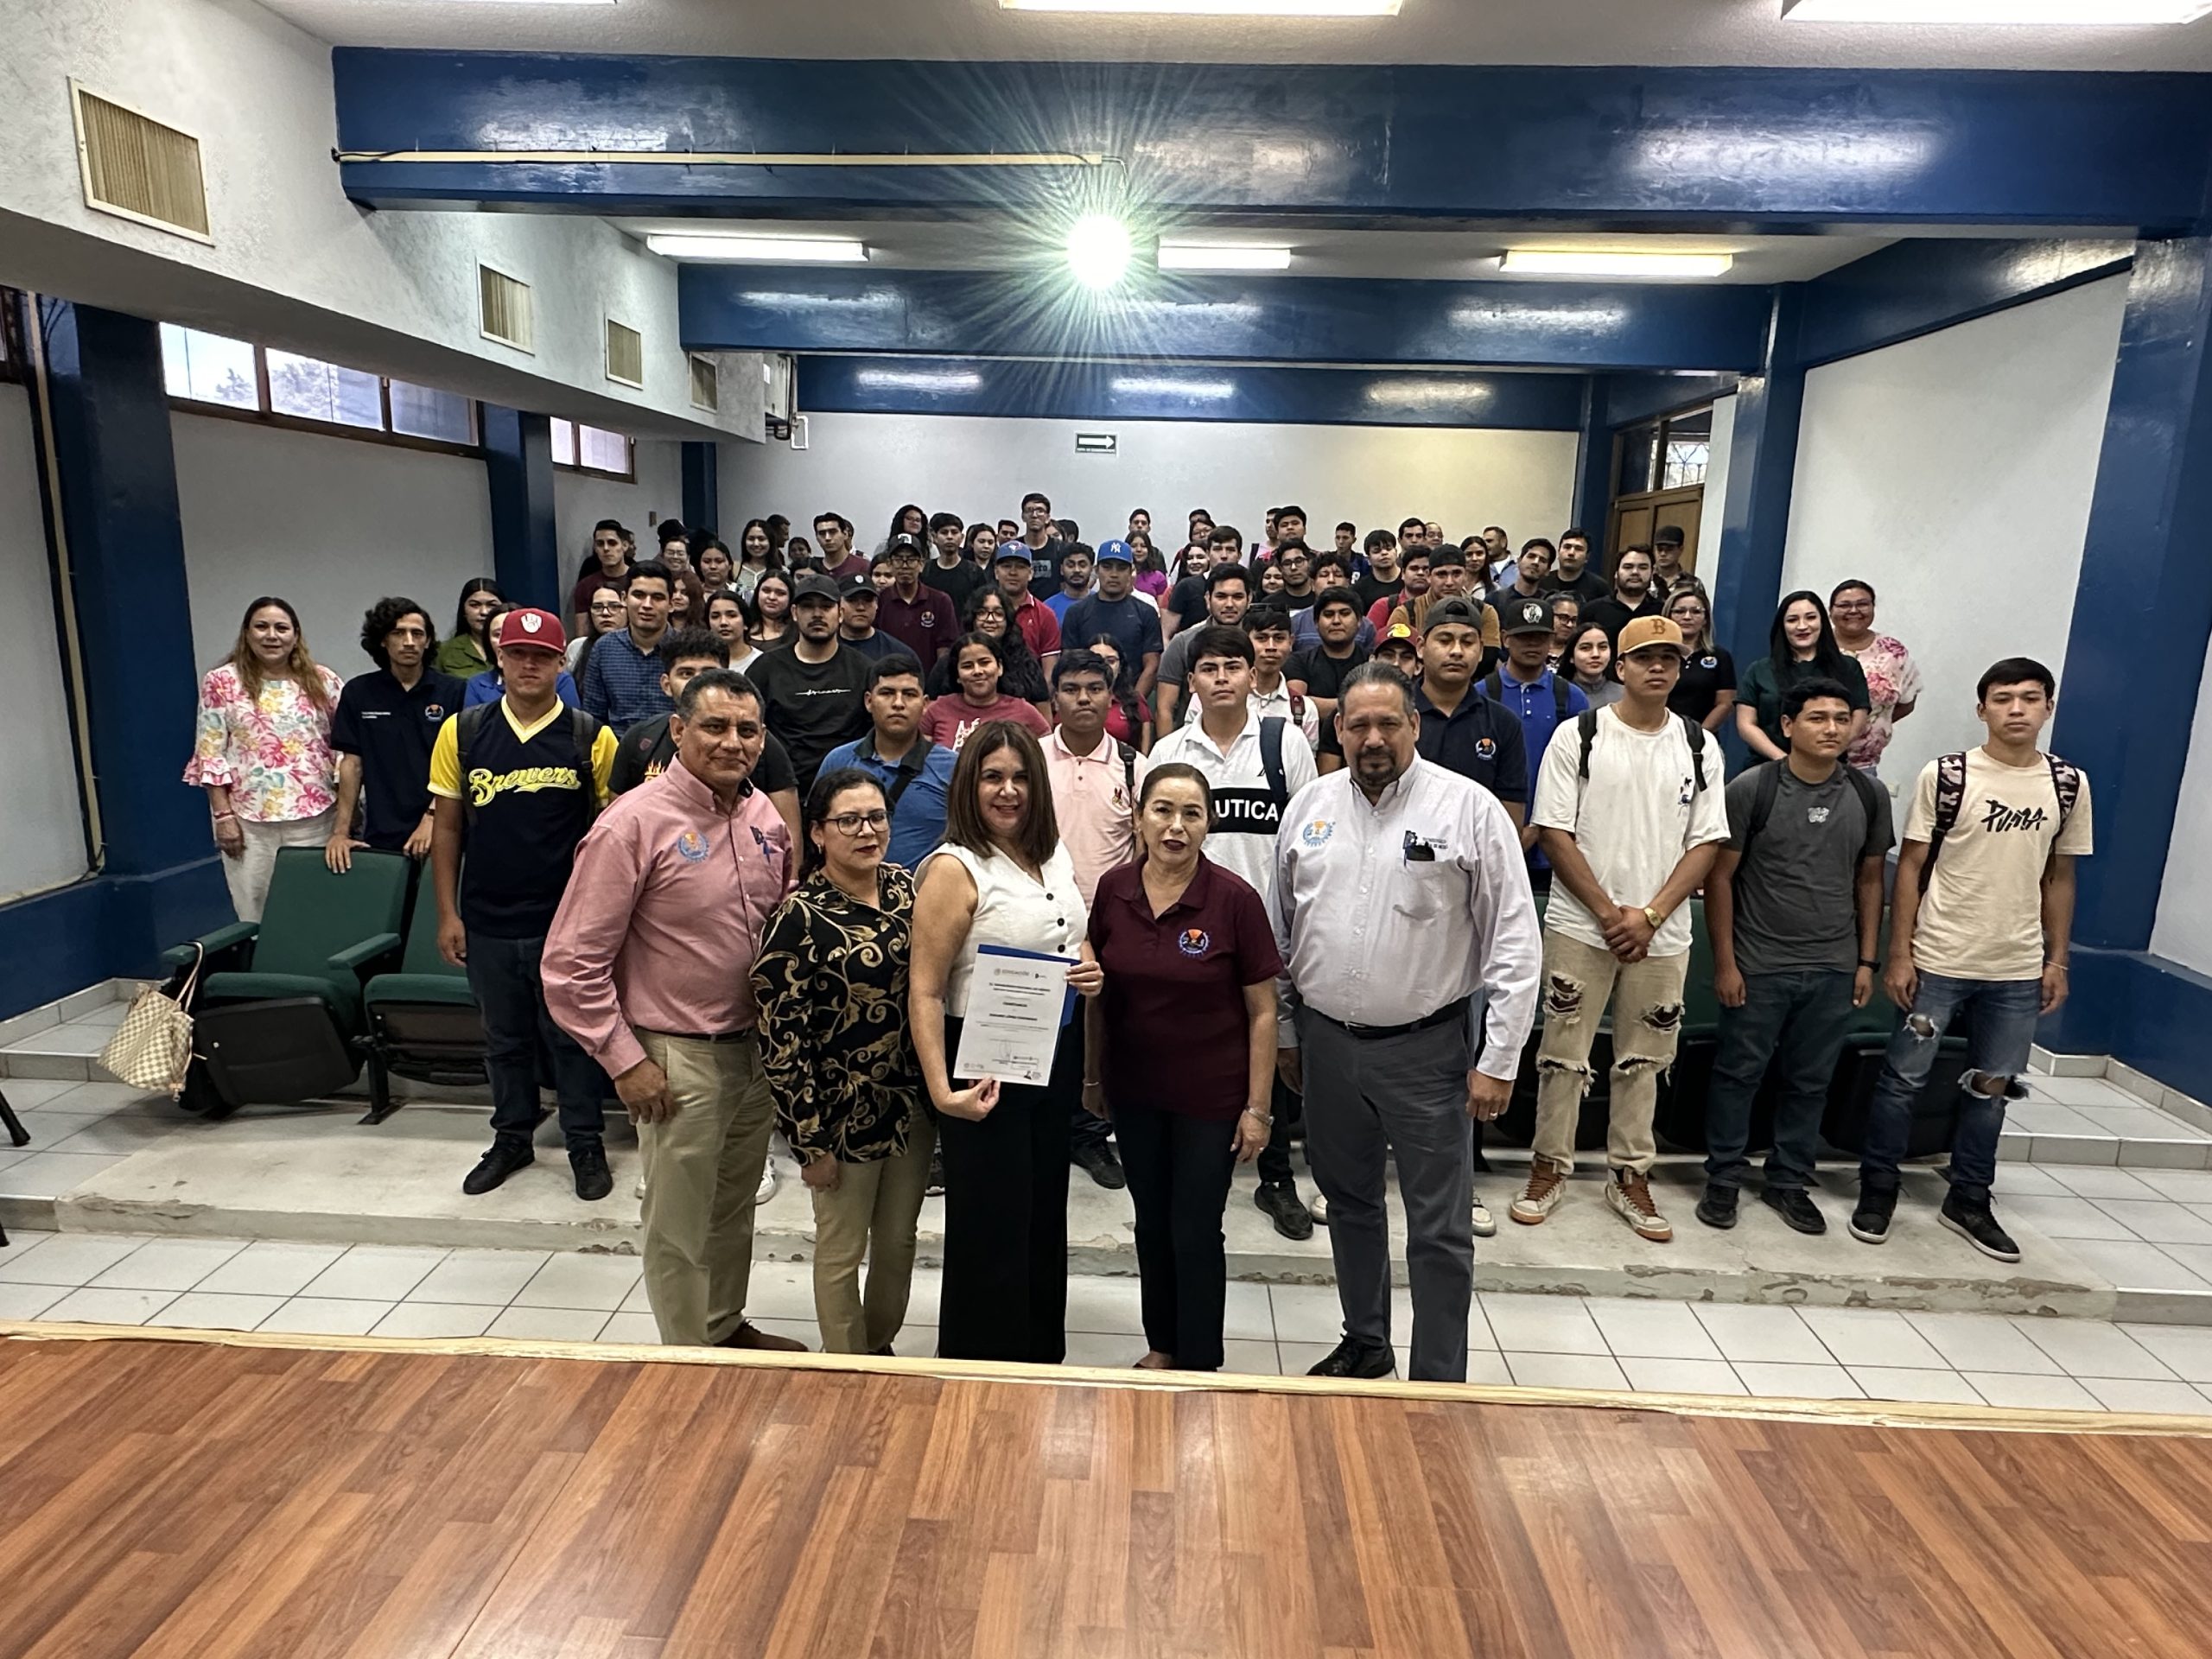 Conferencia “Una Historia que Inspira” de Ross Coronado Motiva a Estudiantes de Octavo Semestre en el IT Huatabampo